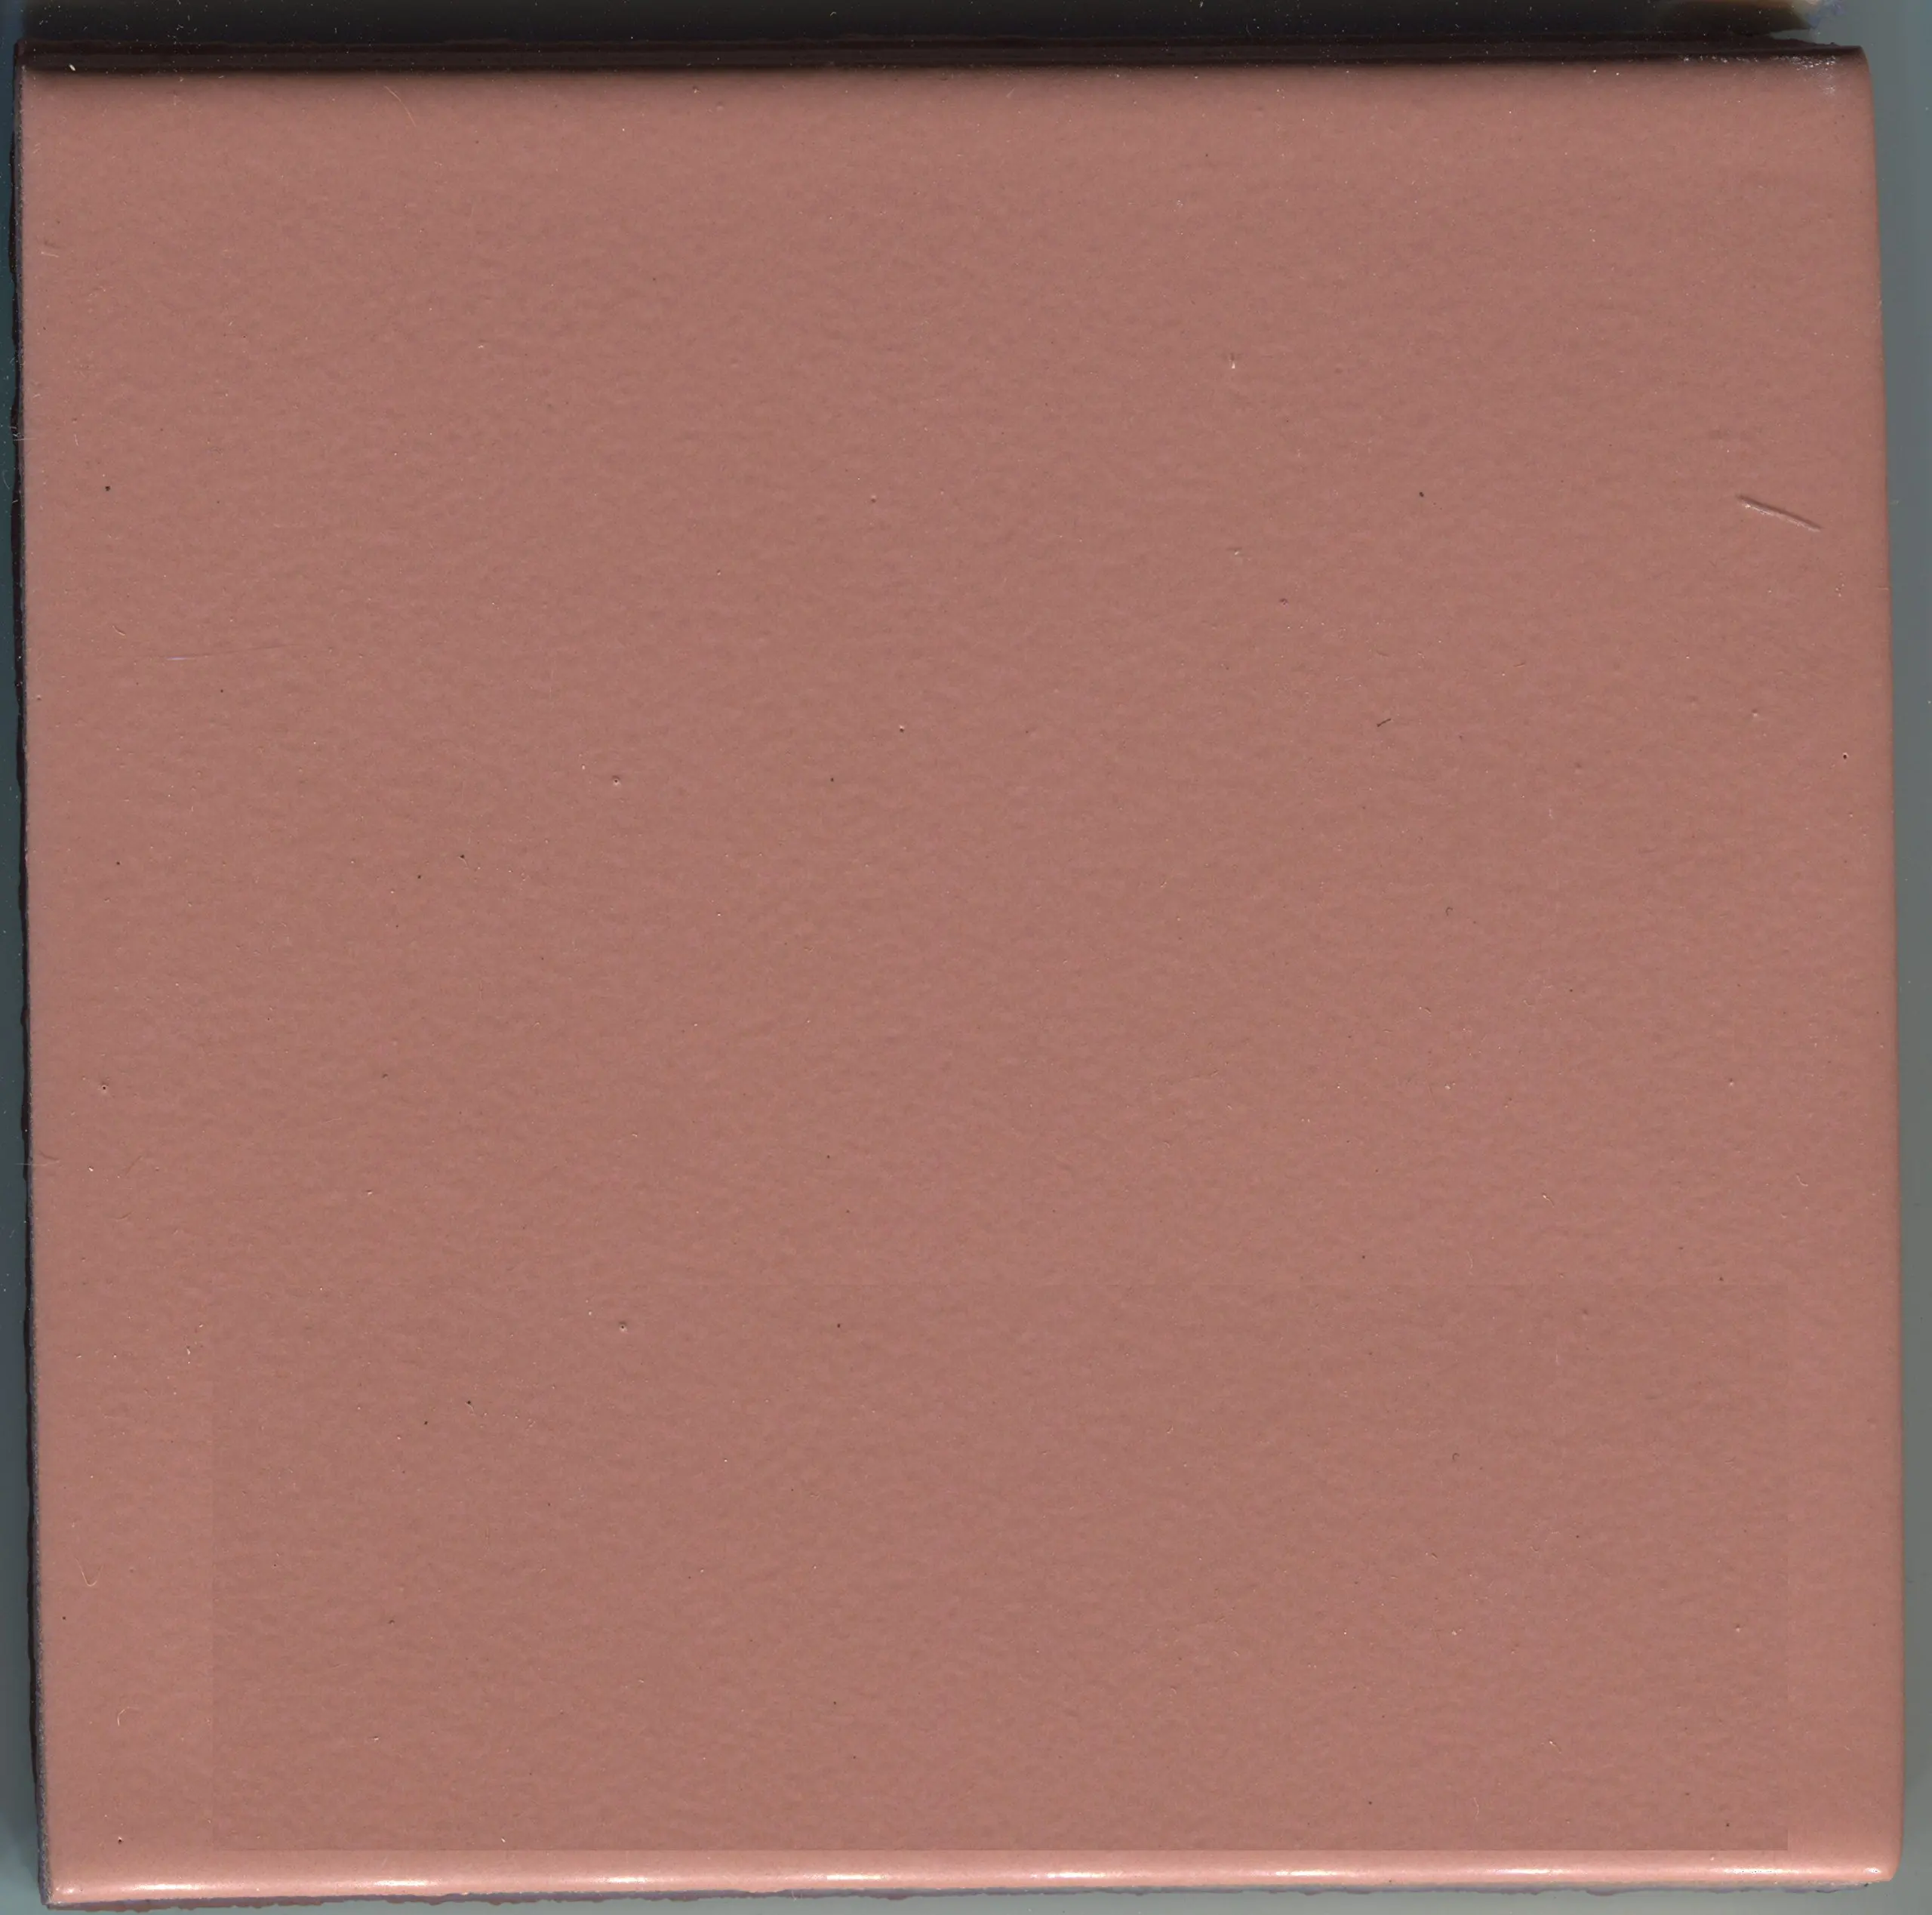 Buy About 4x4 Ceramic Tile Pink Parasol-690 Matte Summitville Wall